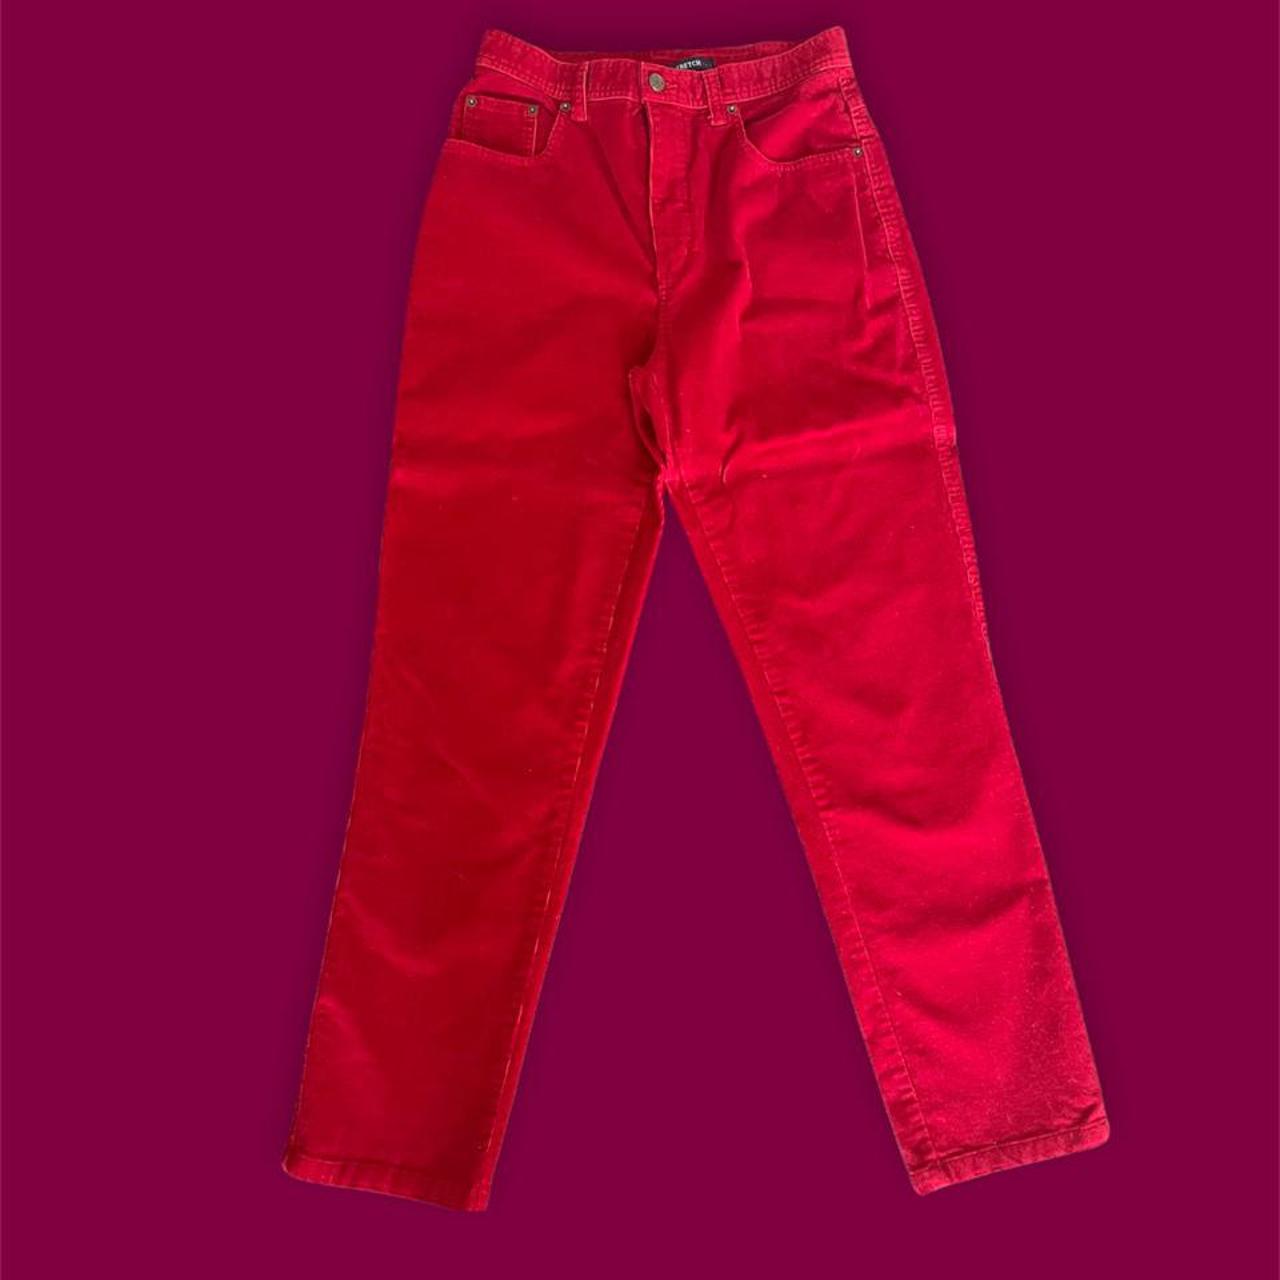 Bill Blass Women's Red and Burgundy Jeans